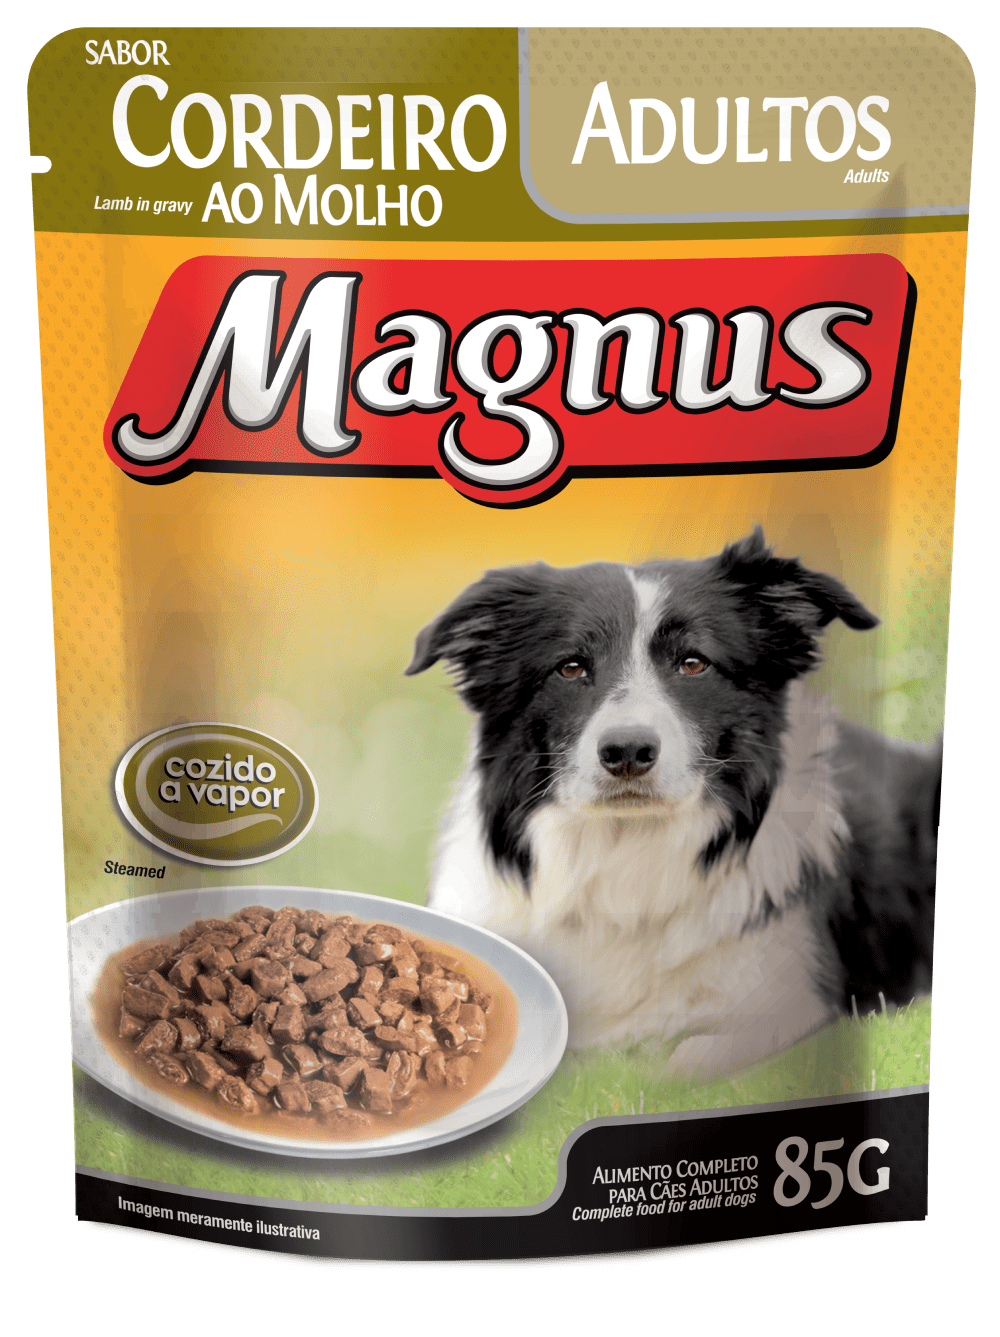 Magnus Sachet Adult Dogs Lamb in Gravy Flavor